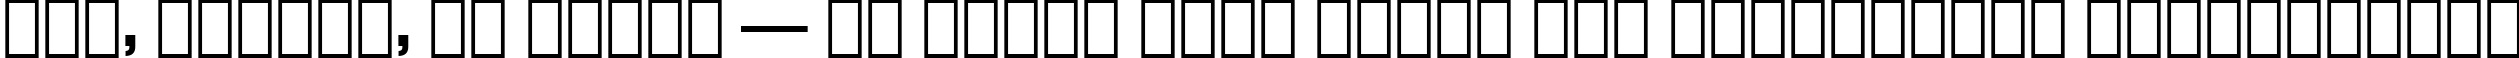 Пример написания шрифтом Square 721 Bold Condensed BT текста на украинском